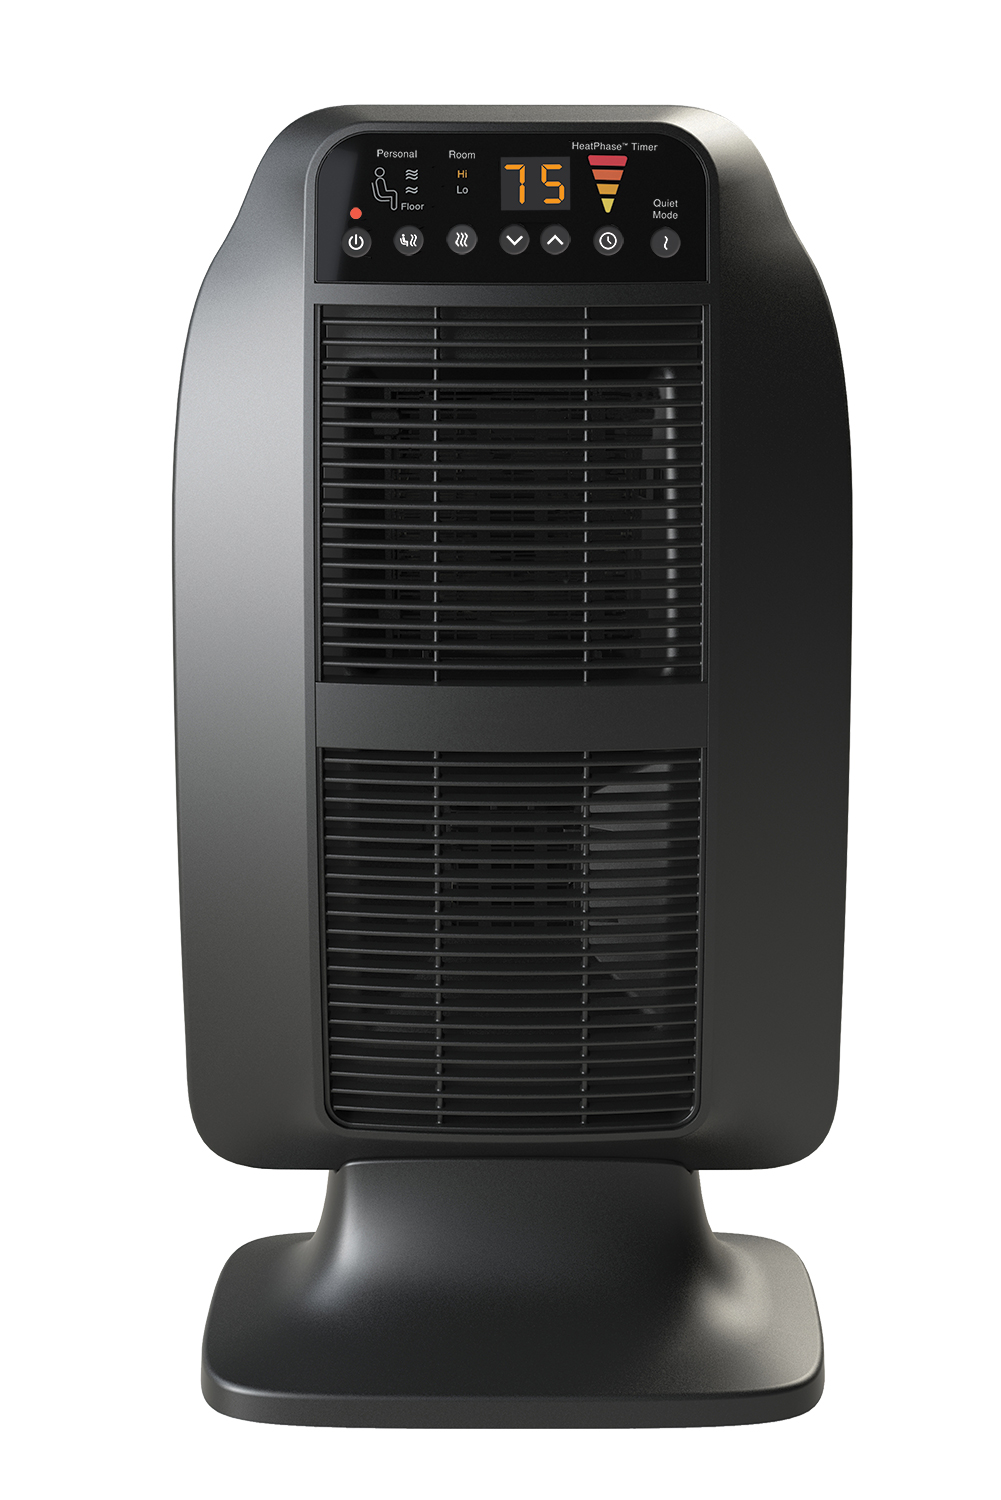 Honeywell Heat-Genius Ceramic Space Heater, HCE845B, Black - image 1 of 7